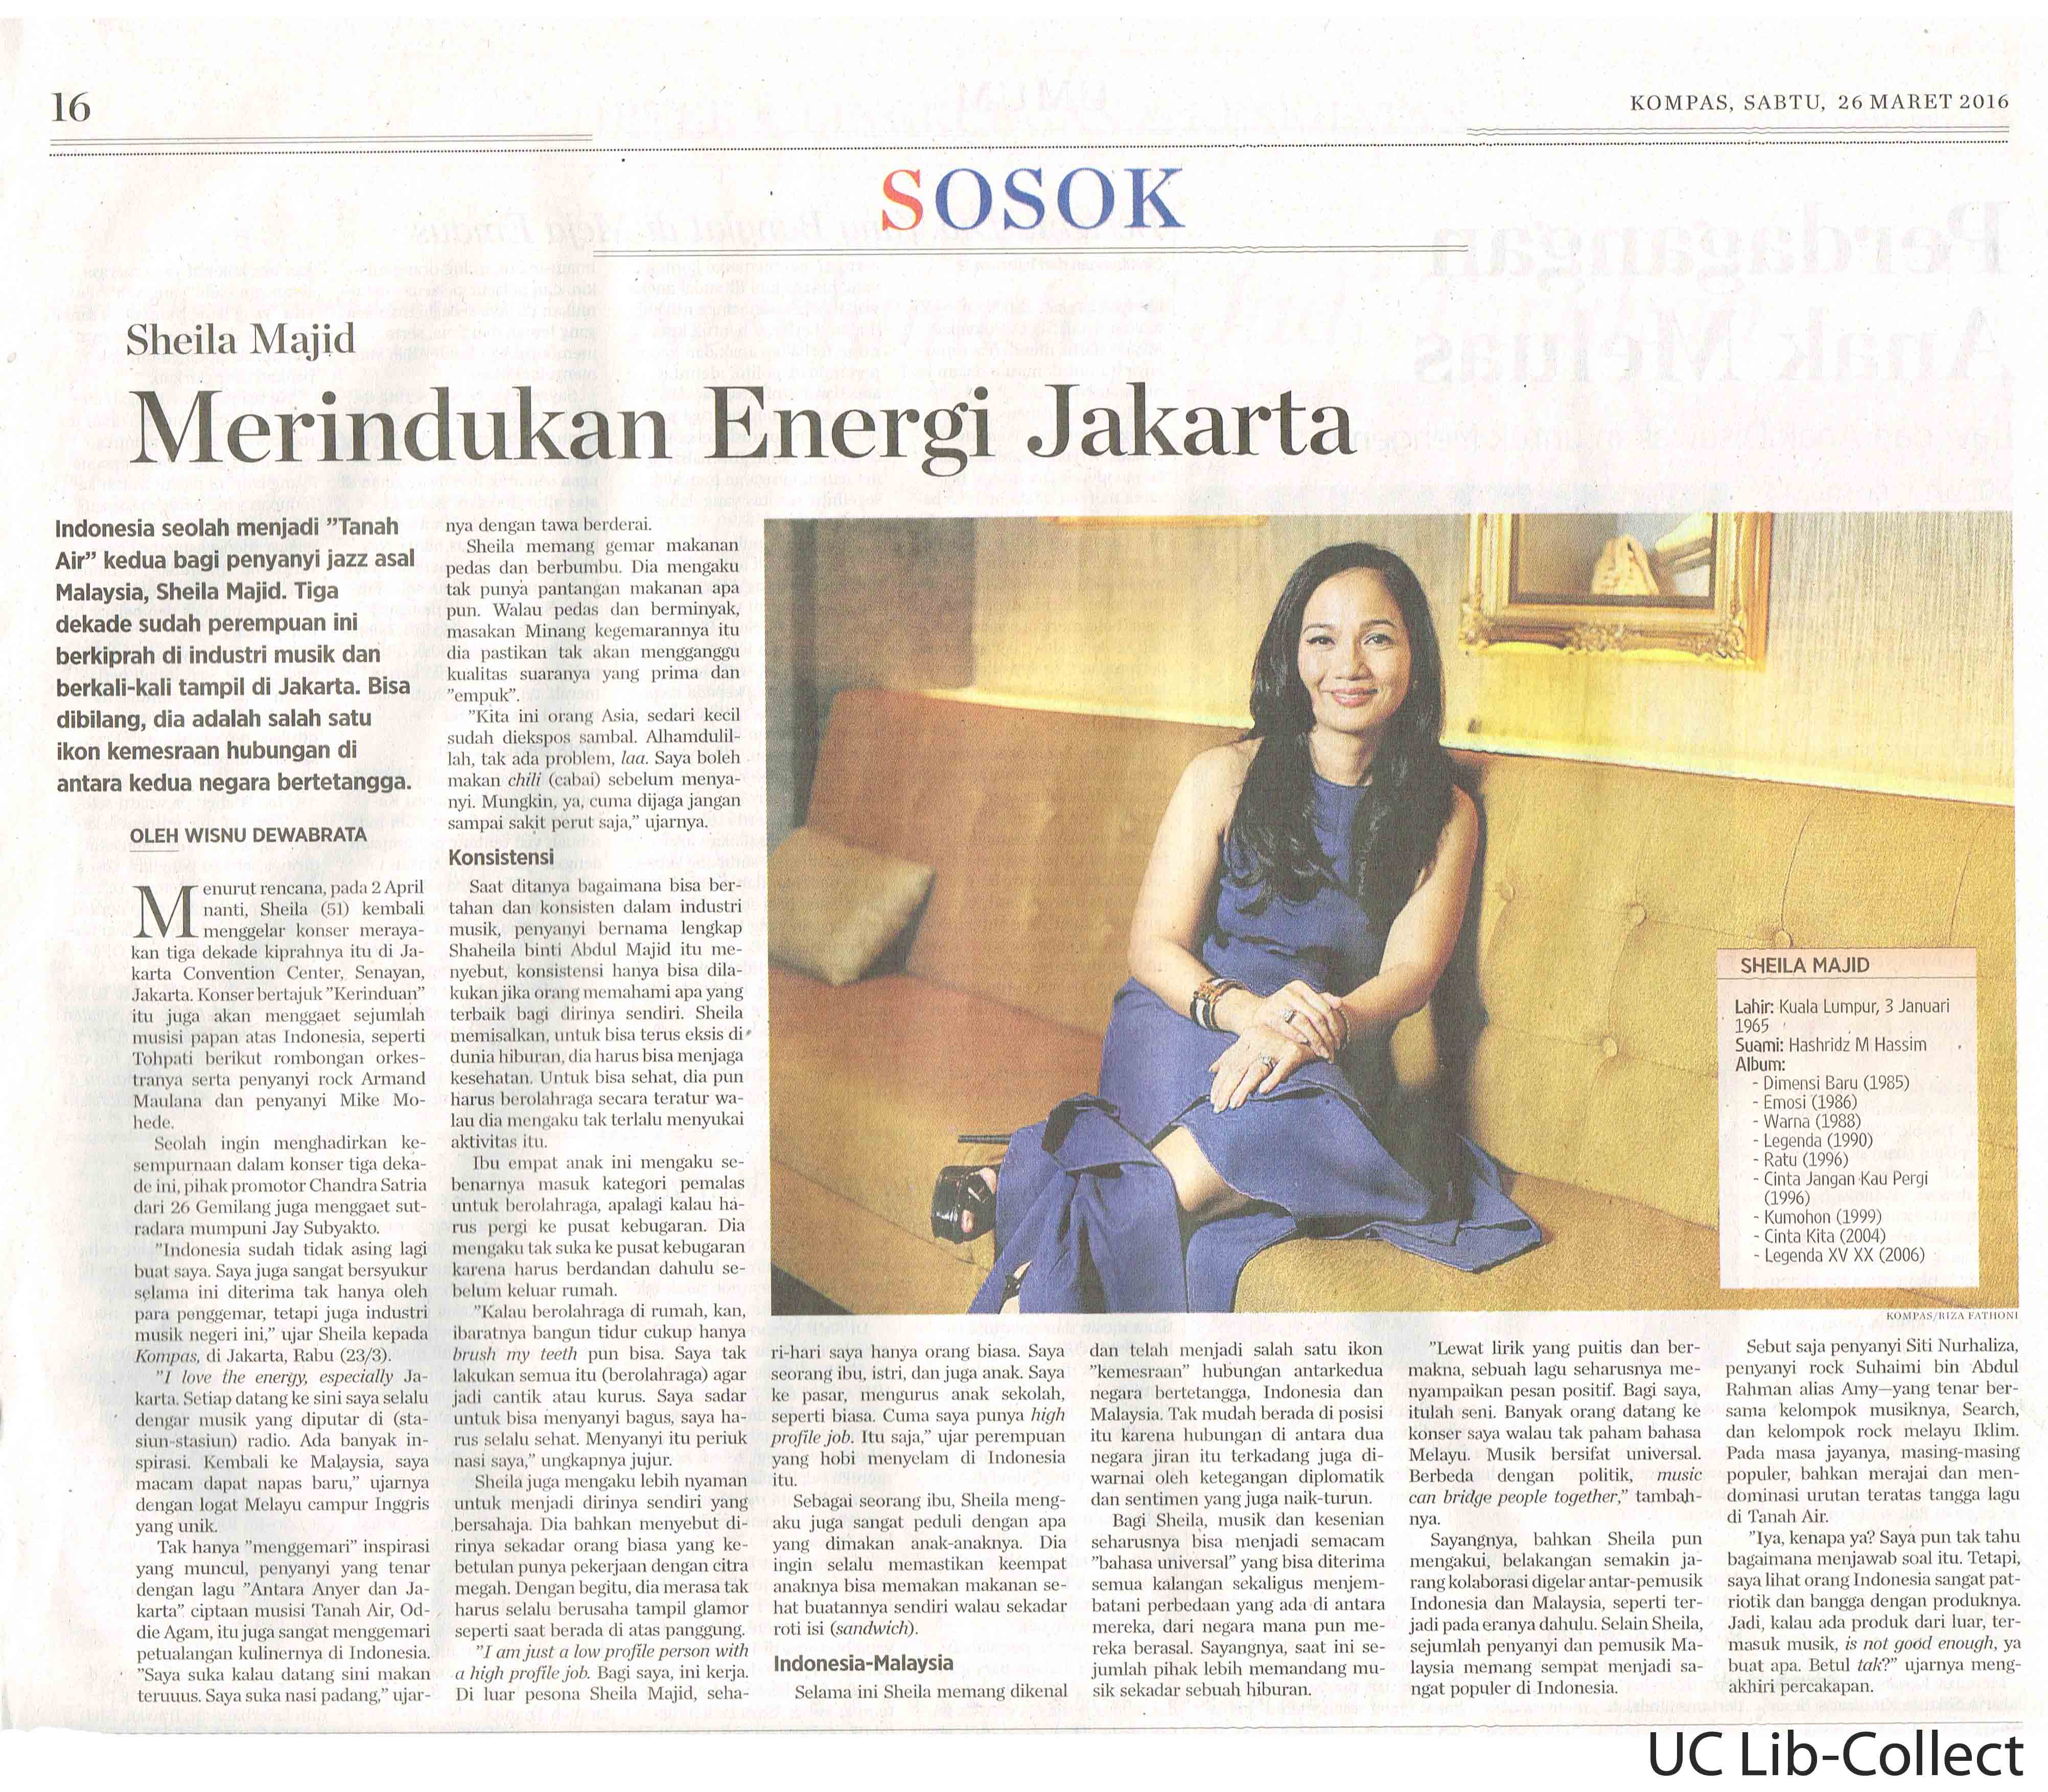 Merindukan Energi Jakarta. Kompas.26 Maret 2016.Hal.16